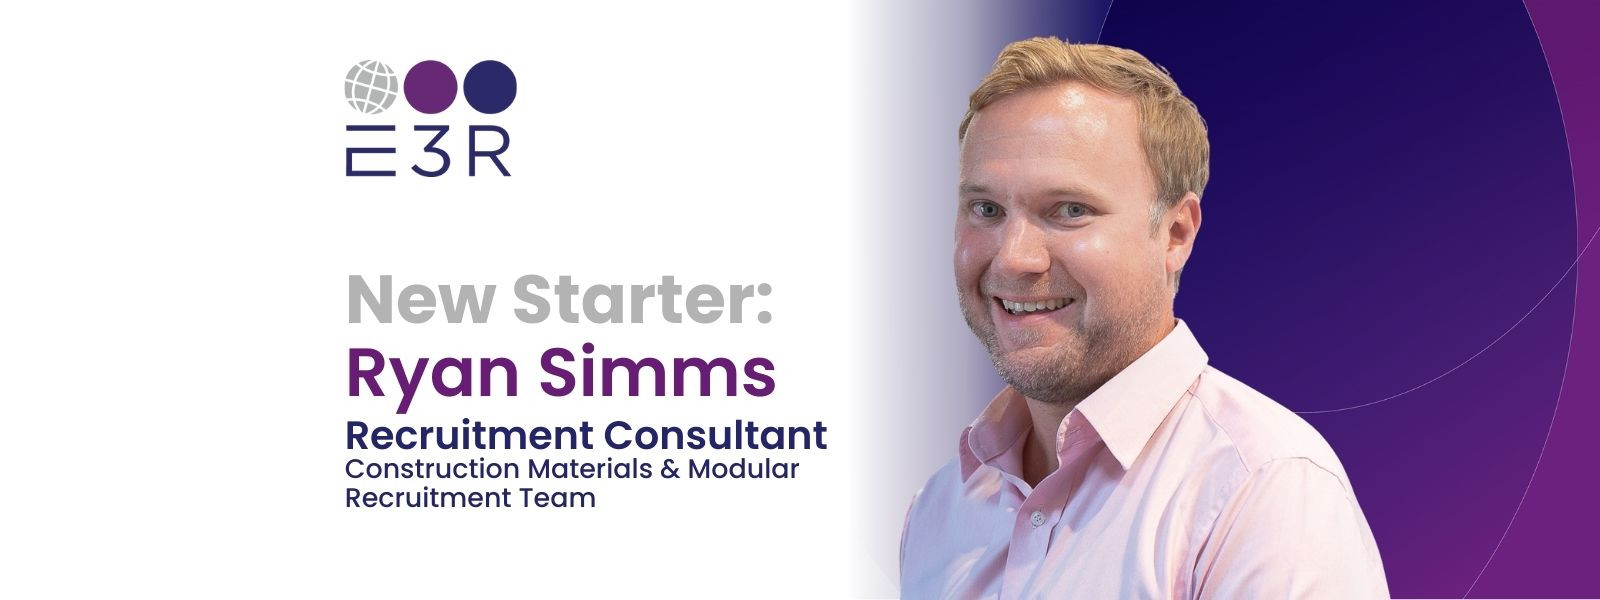 Construction Materials & Modular Recruitment Team welcomes new Recruitment Consultant, Ryan Simms